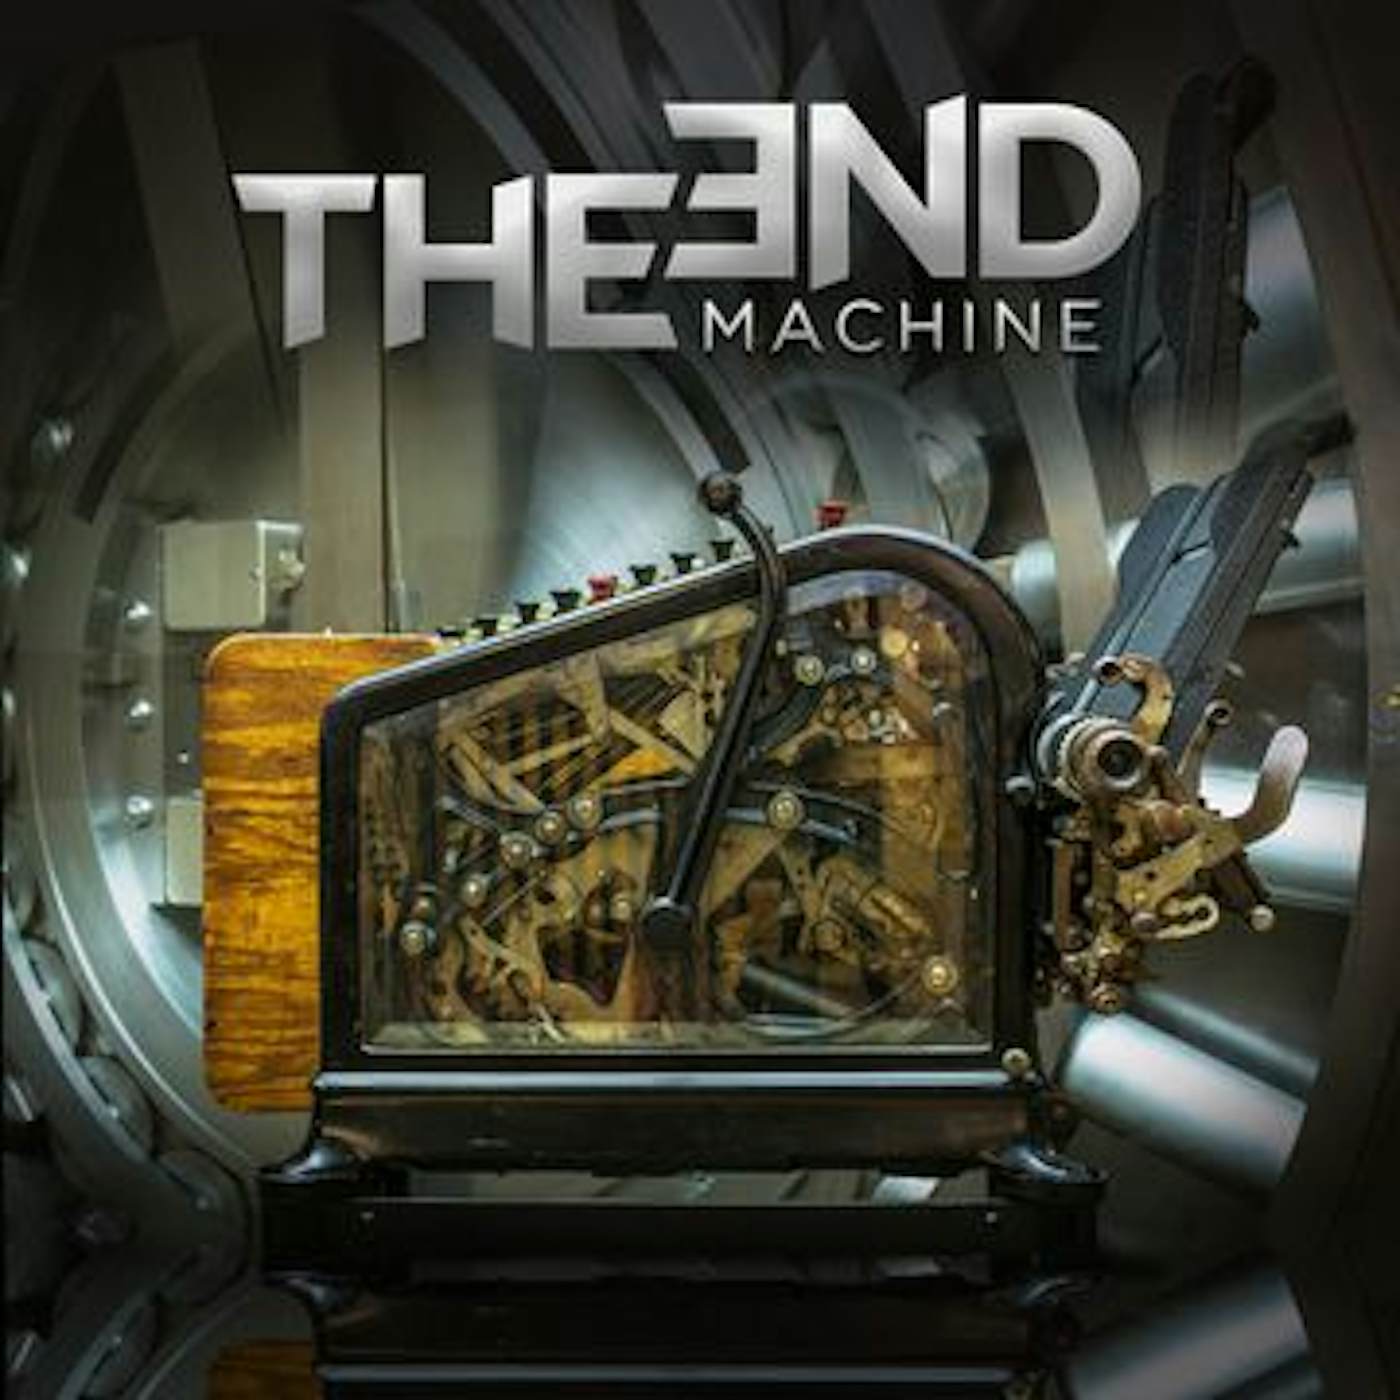 The End Machine End: Machine Vinyl Record